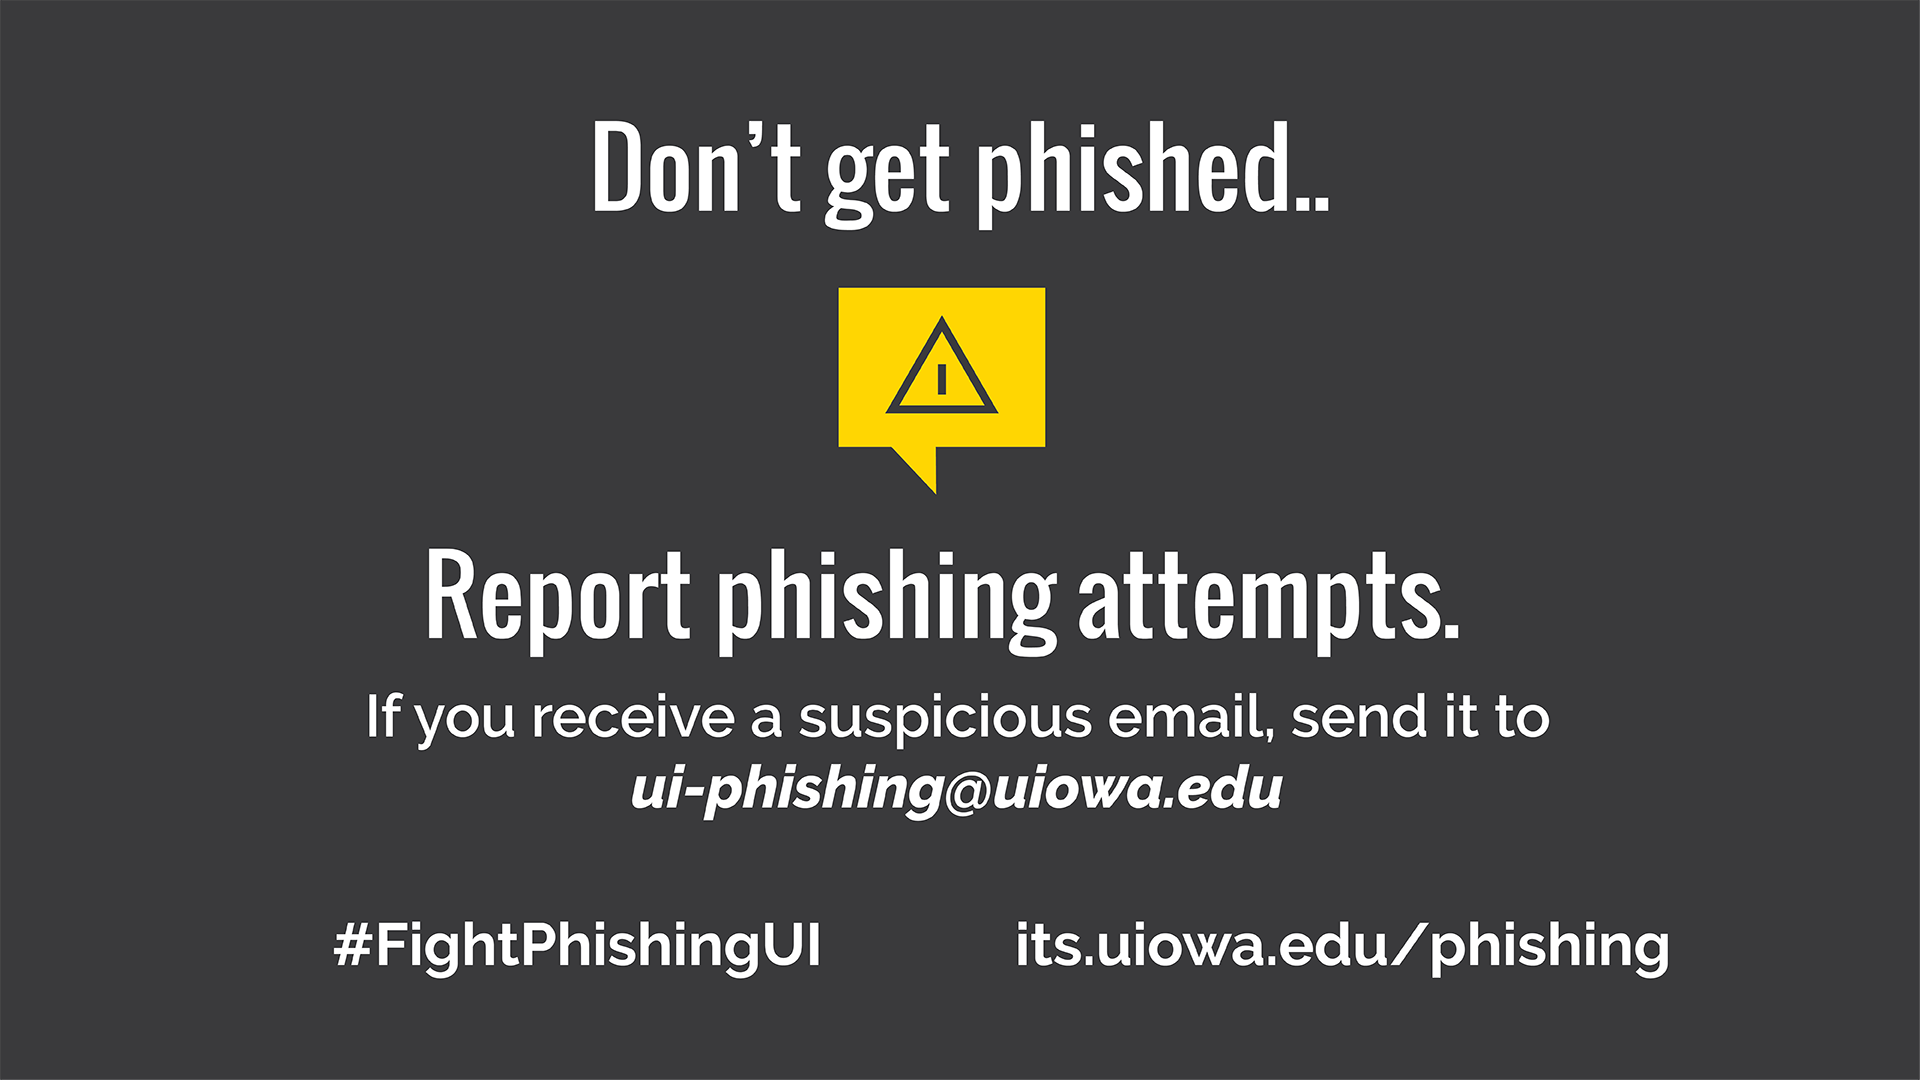 Don't get phished.. Report phishing attempts. If you receive a suspicious email send it to ui-phishing@uiowa.edu. #FightPhishingUI its.uiowa.edu/phishing